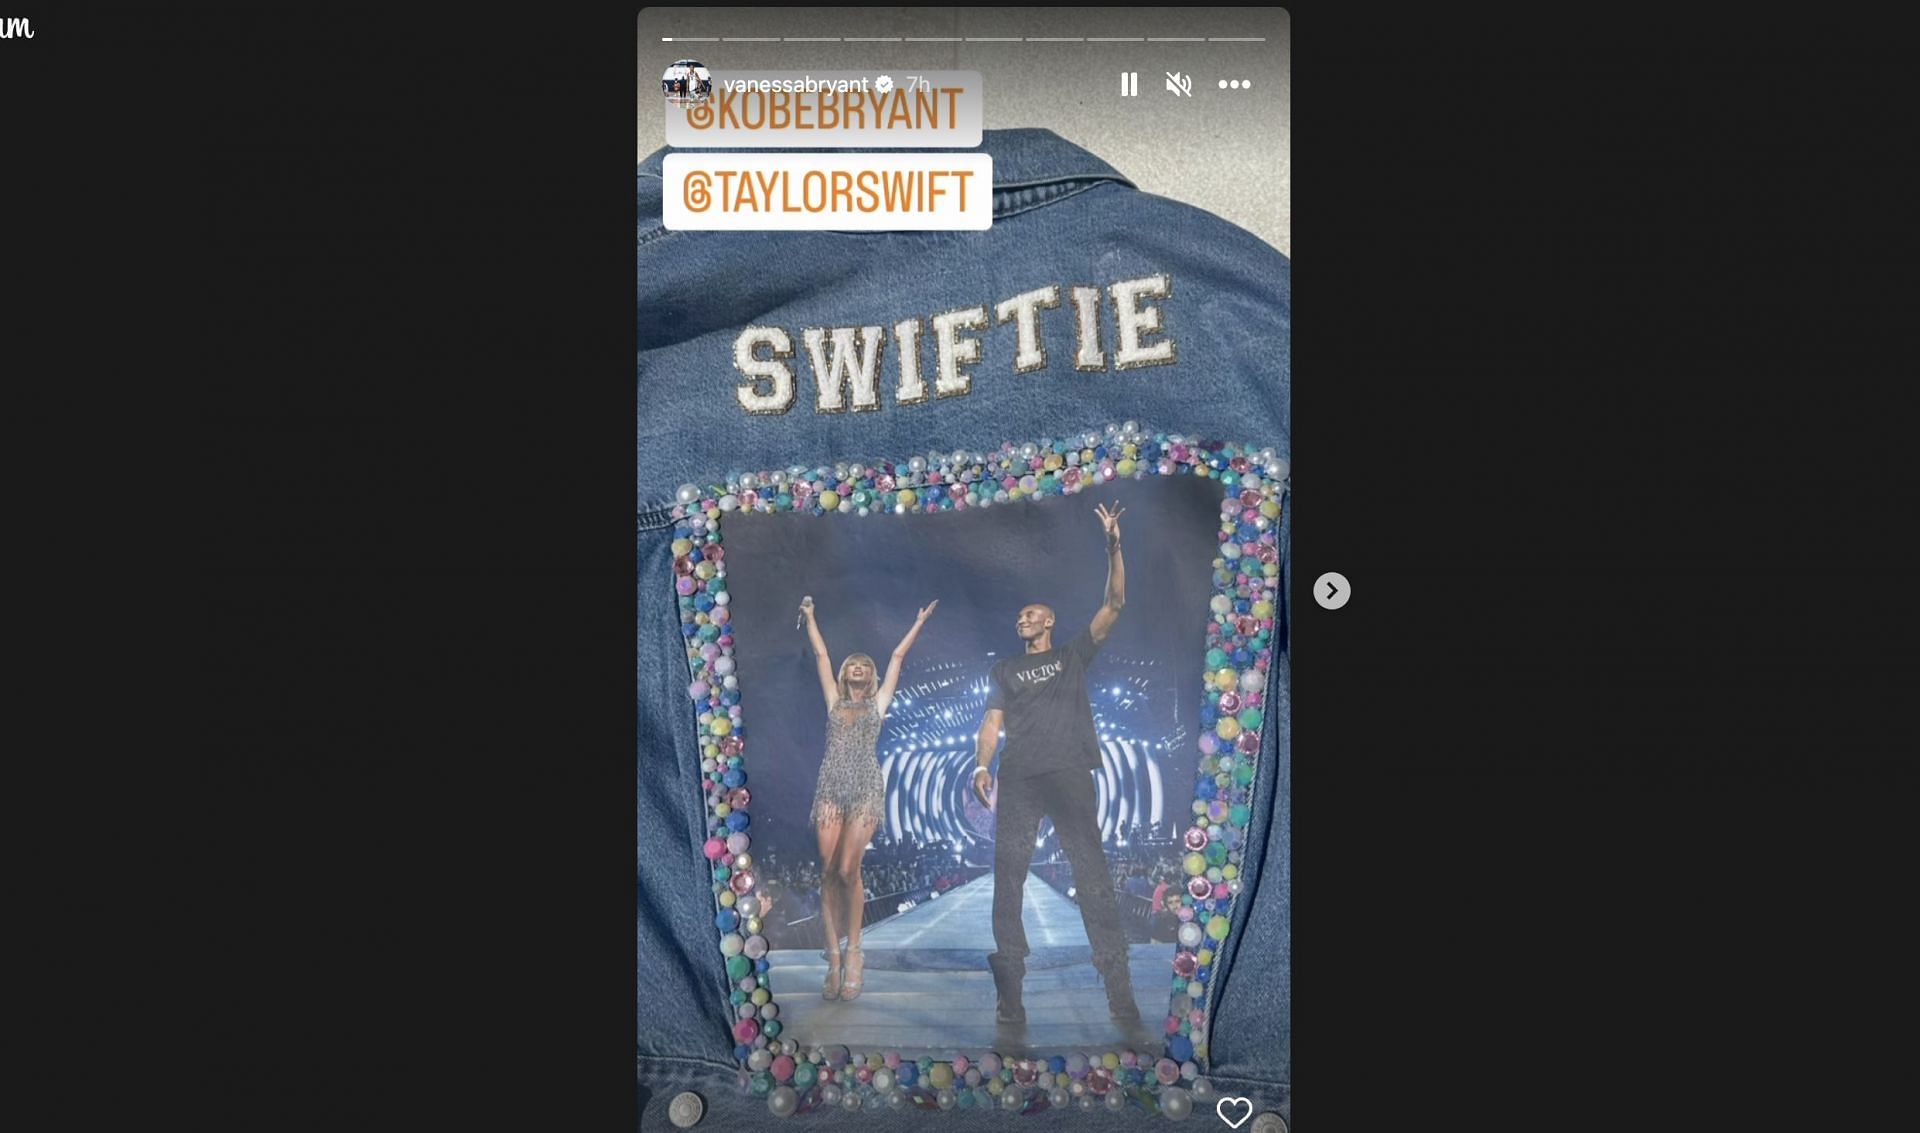 Vanessa Bryant Dons Kobe Bryant, Taylor Swift Jacket for 'Eras Tour